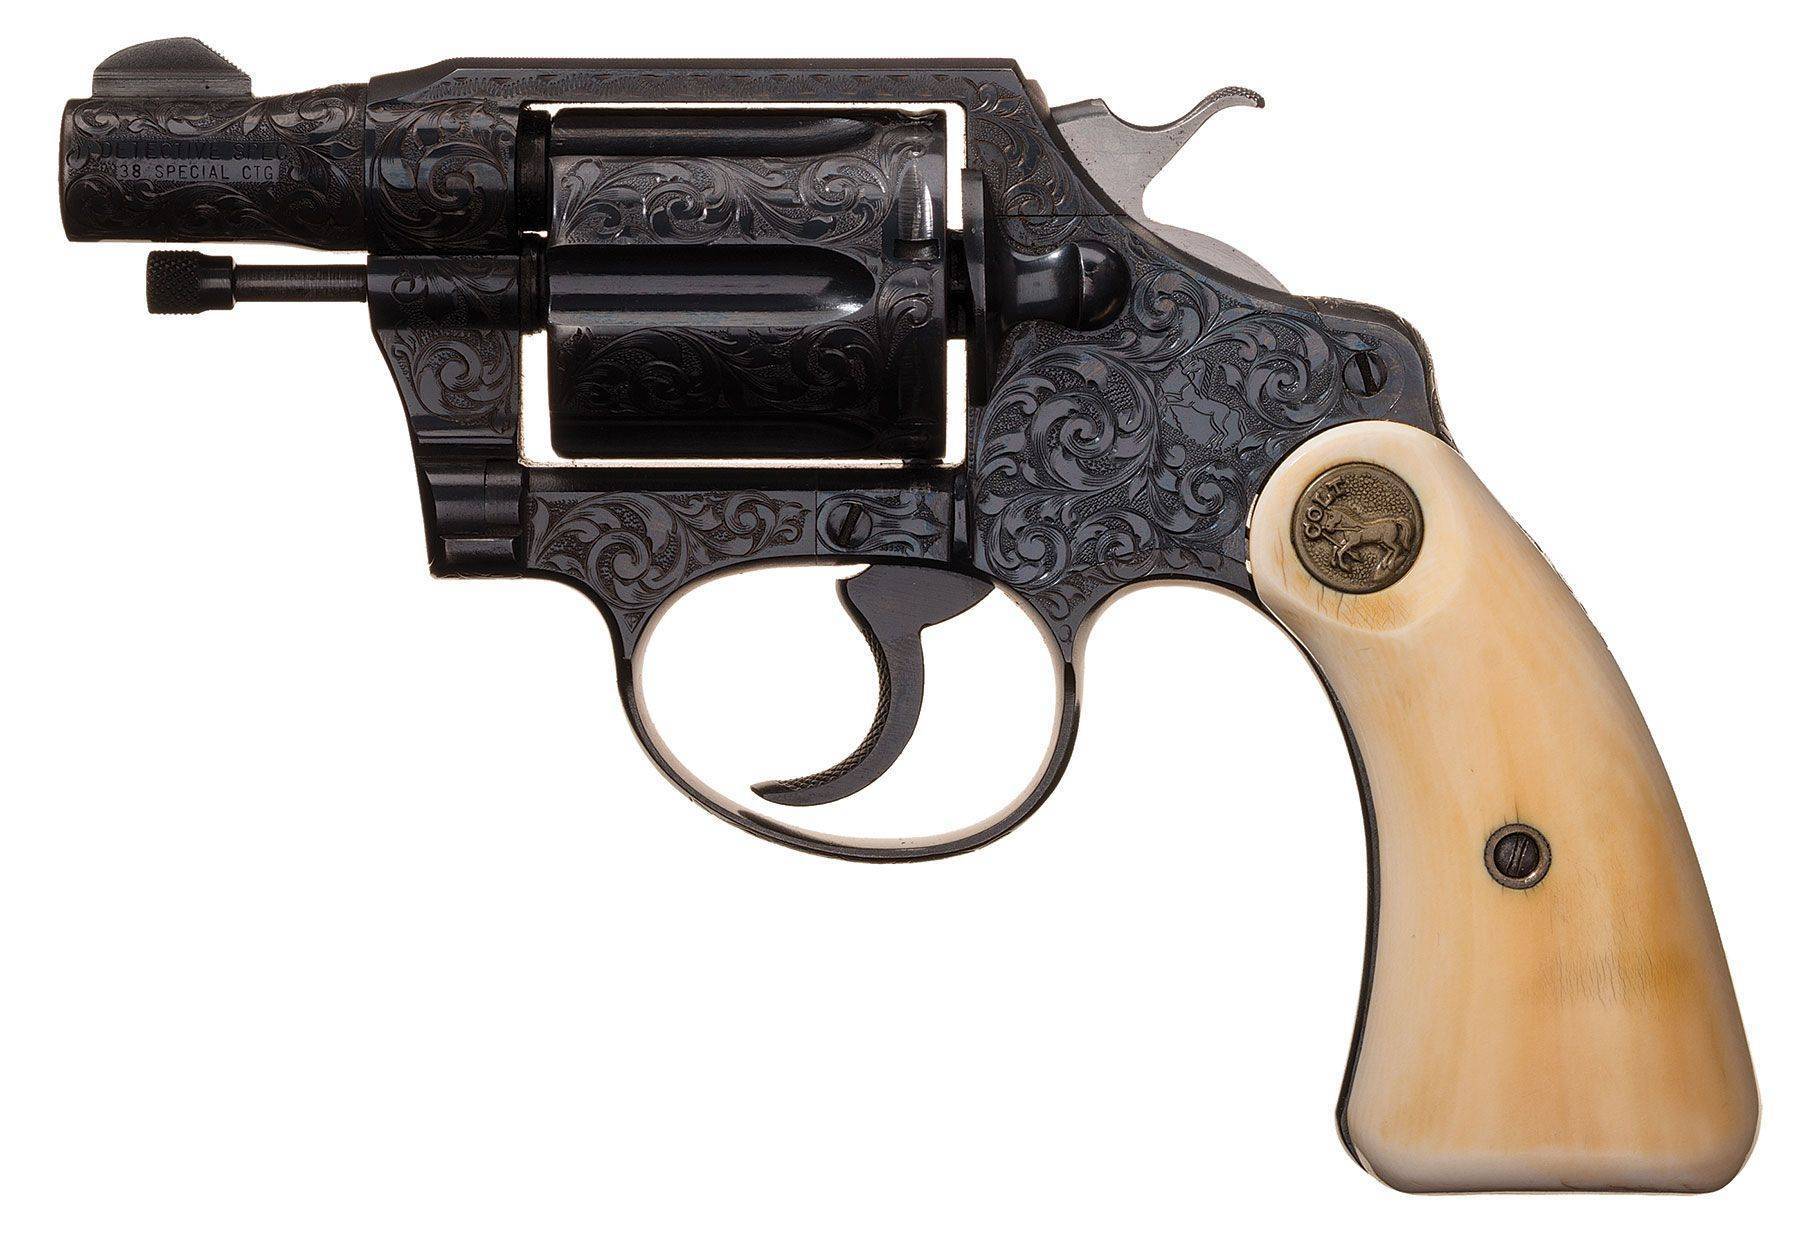 Colt detective special - револьвер в стиле нуар